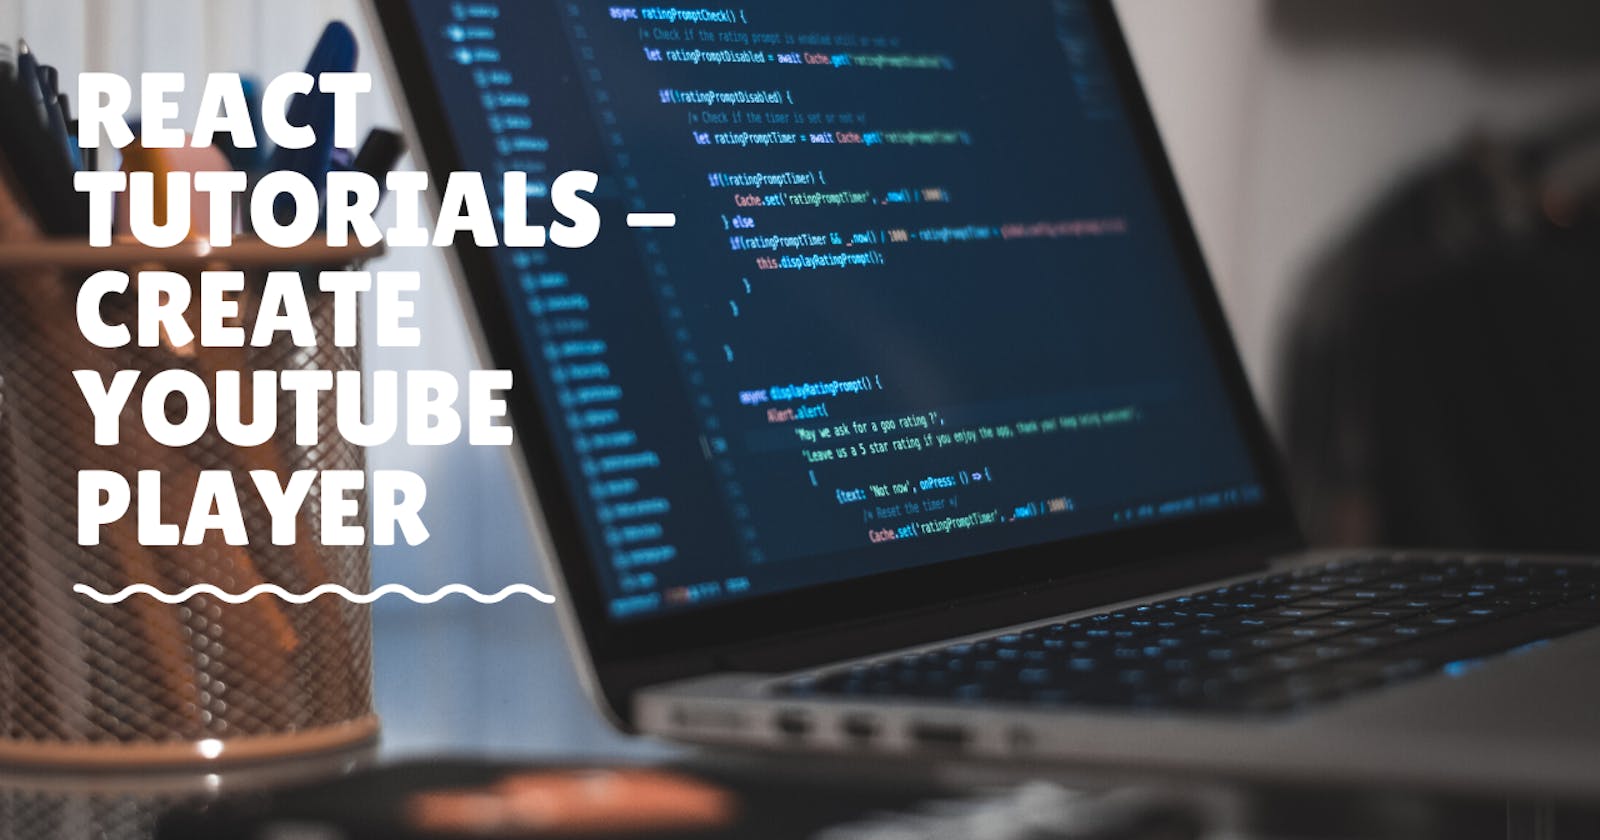 React Tutorials - Create Youtube Player - 2